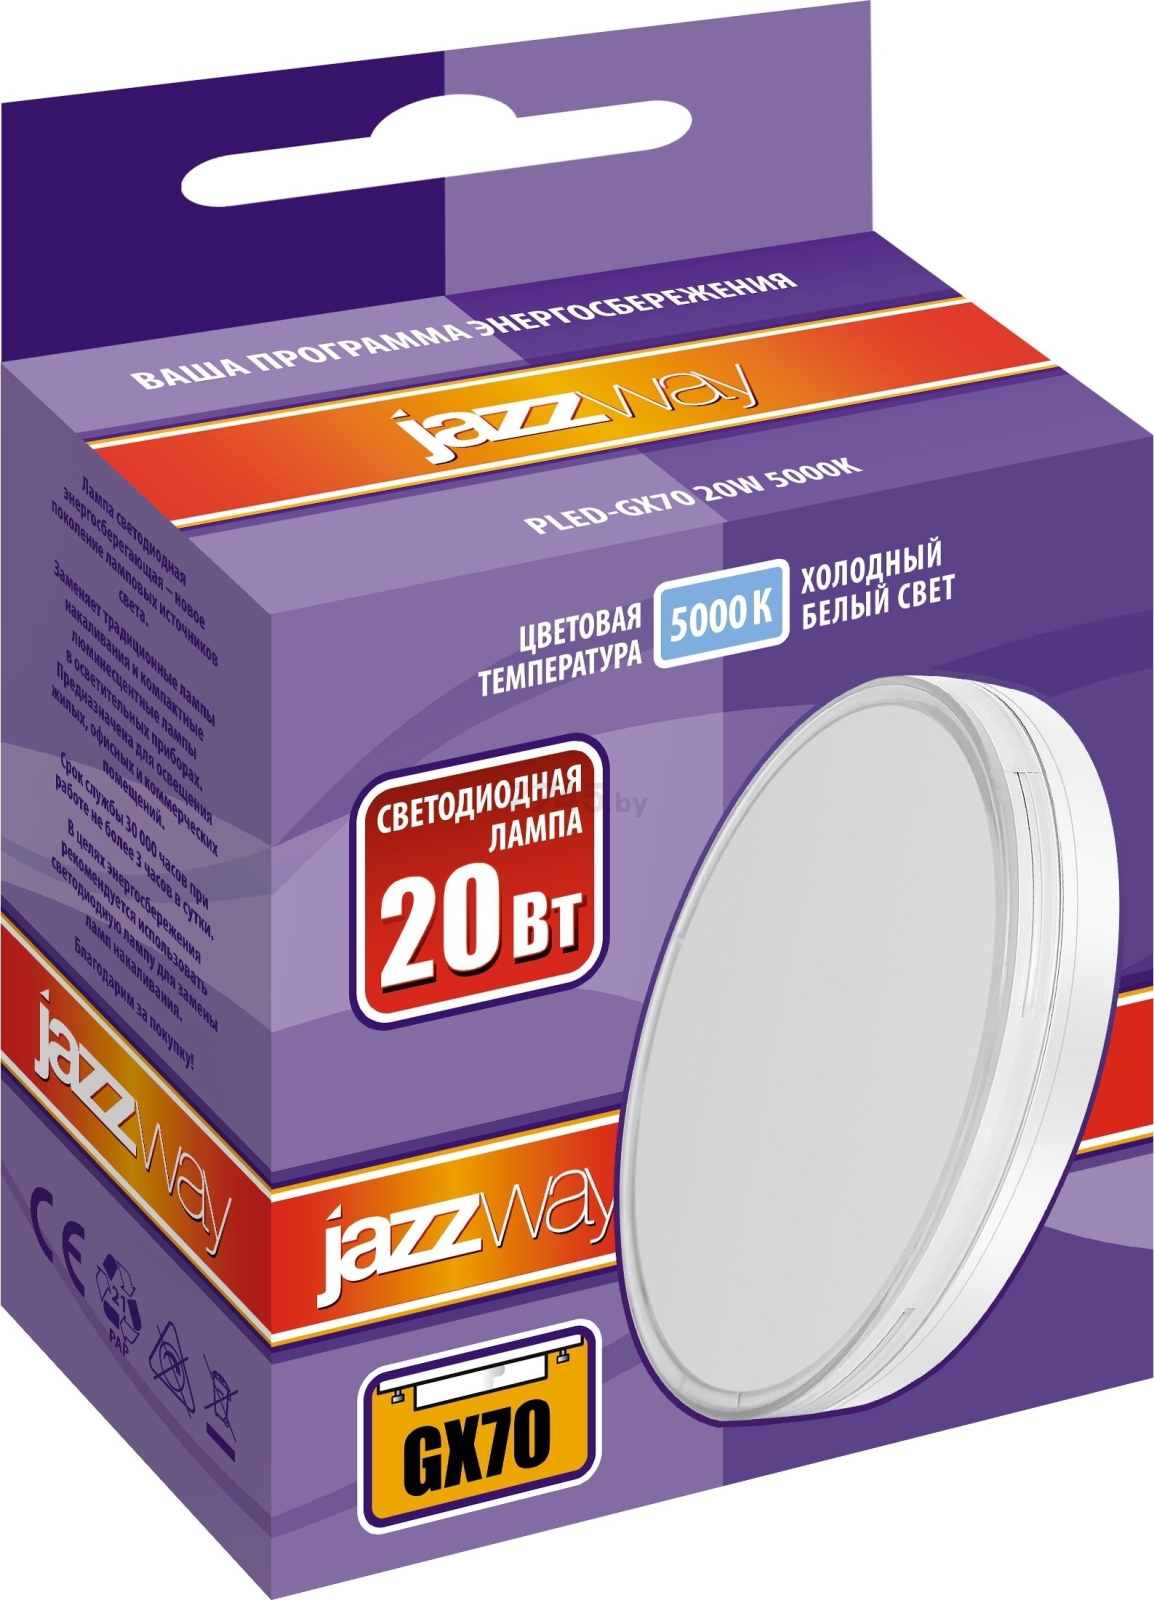 Лампа светодиодная GX70 JAZZWAY PLED-GX таблетка 20 Вт 5000К (1027696A)